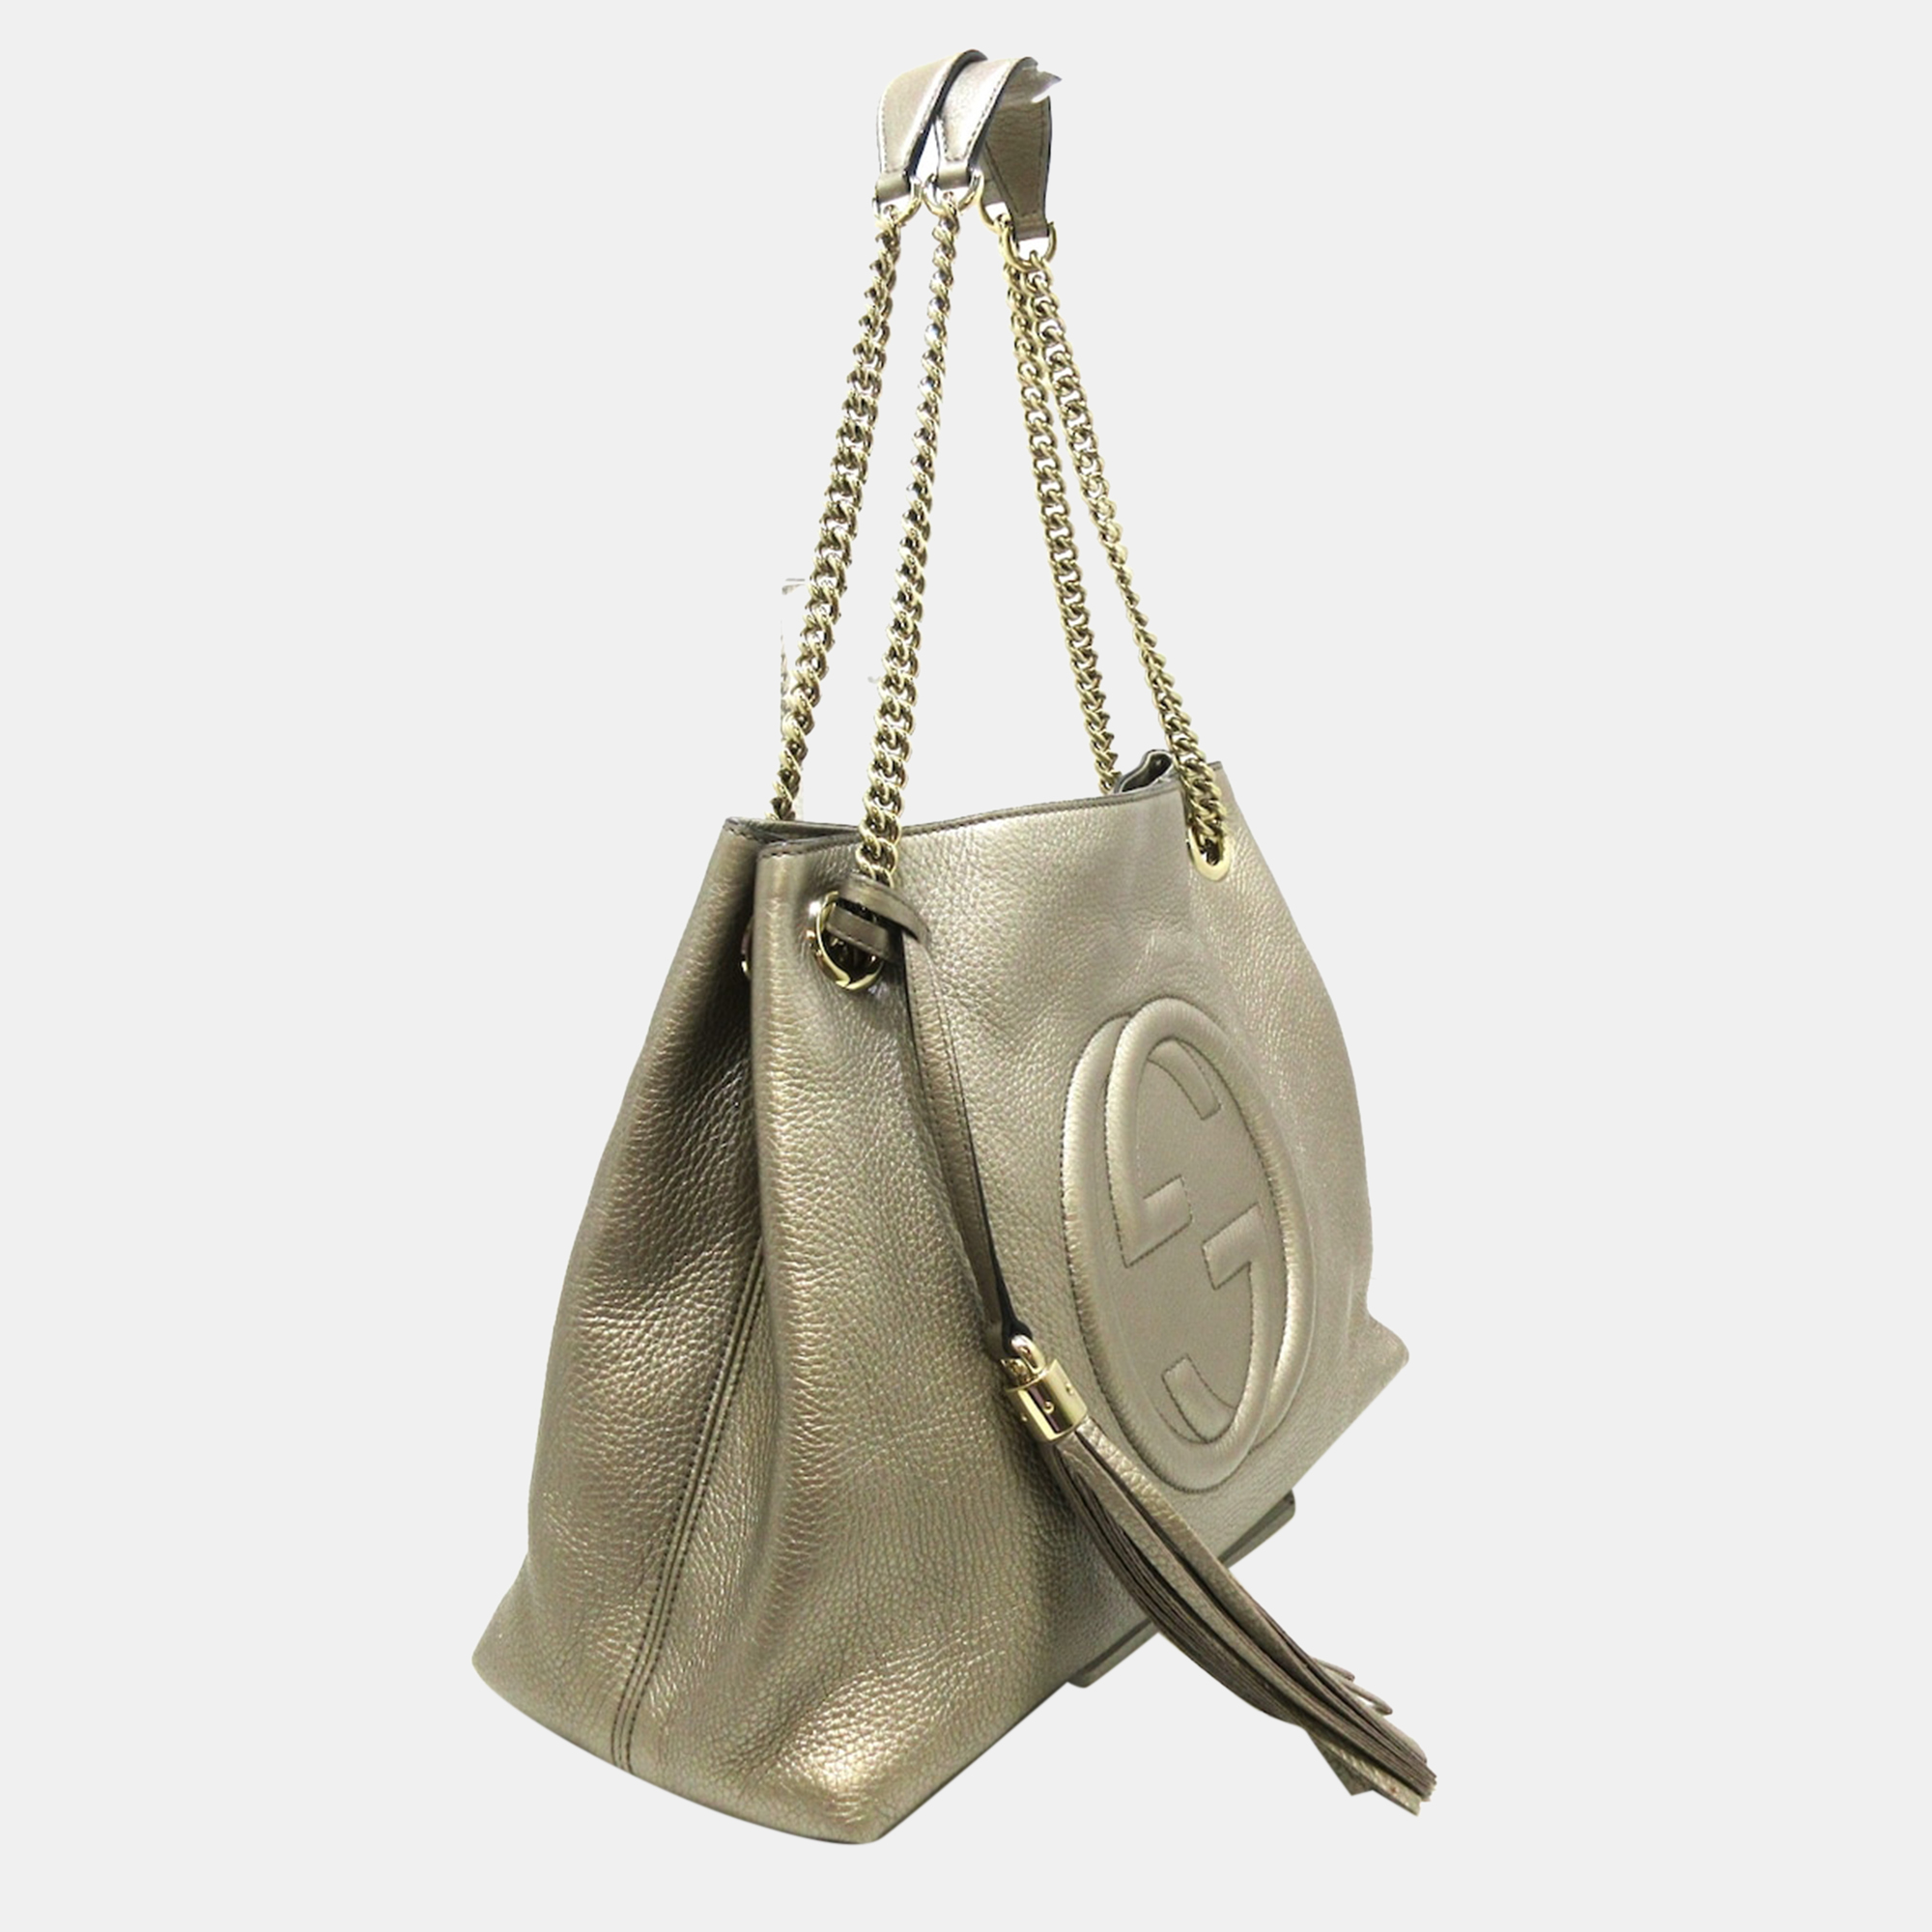 Gucci Silver Leather Medium Soho Chain Tote Bag